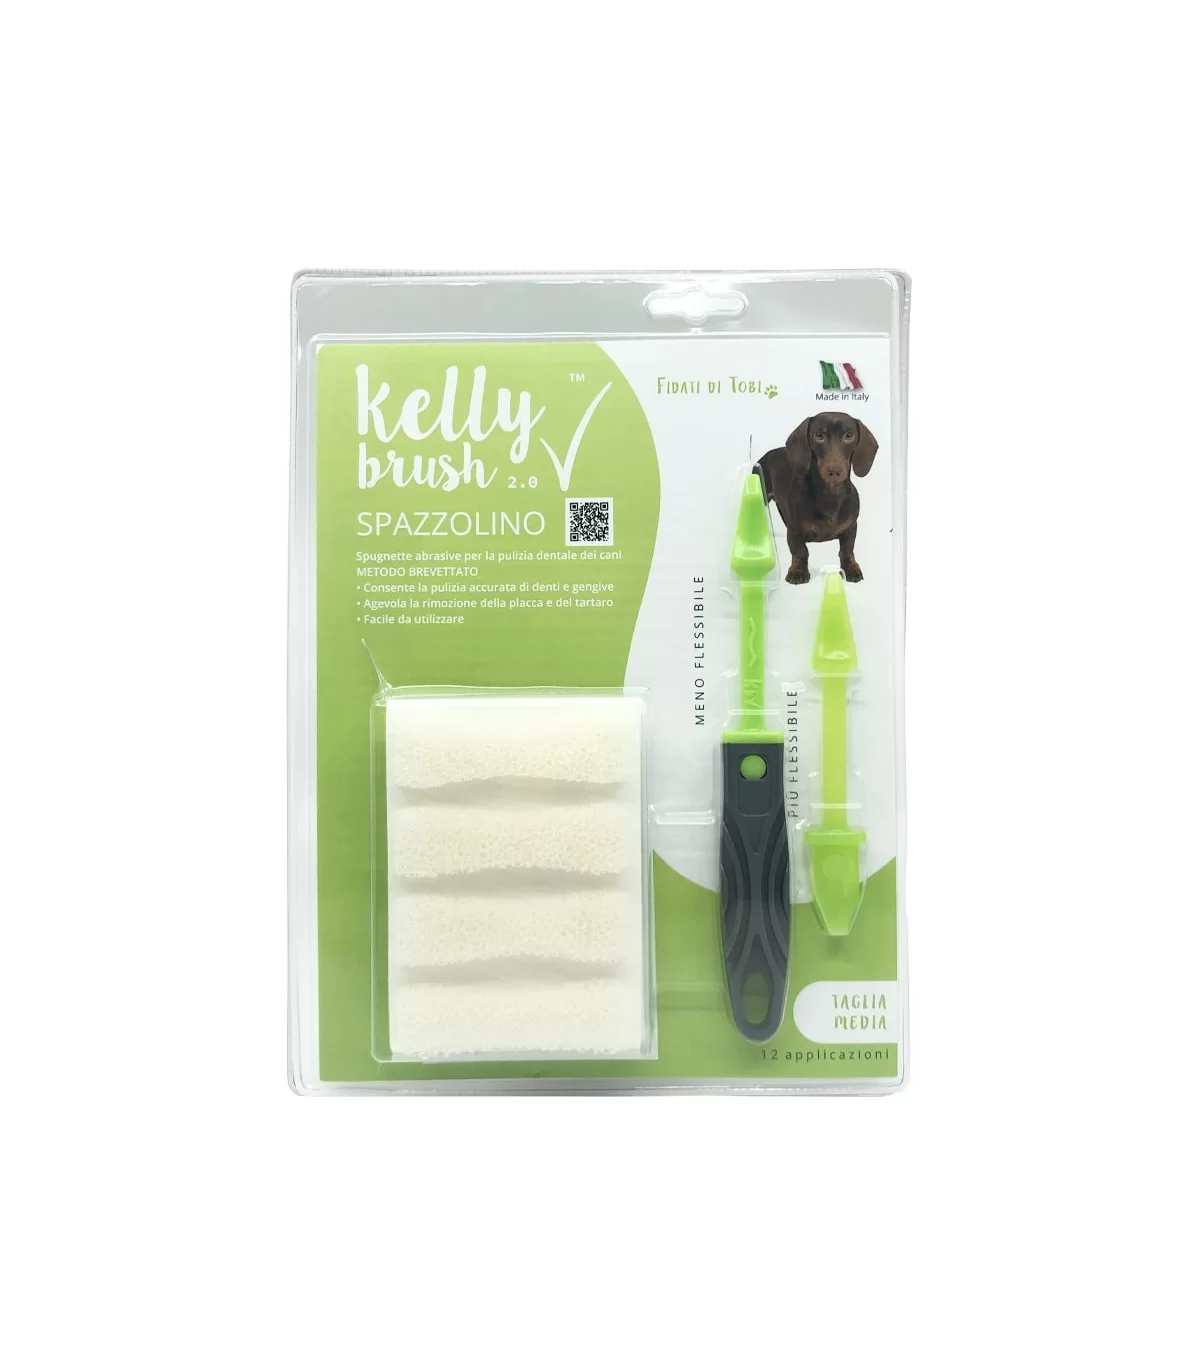 Kelly Brush kit spazzolino taglia media 12 applicazioni